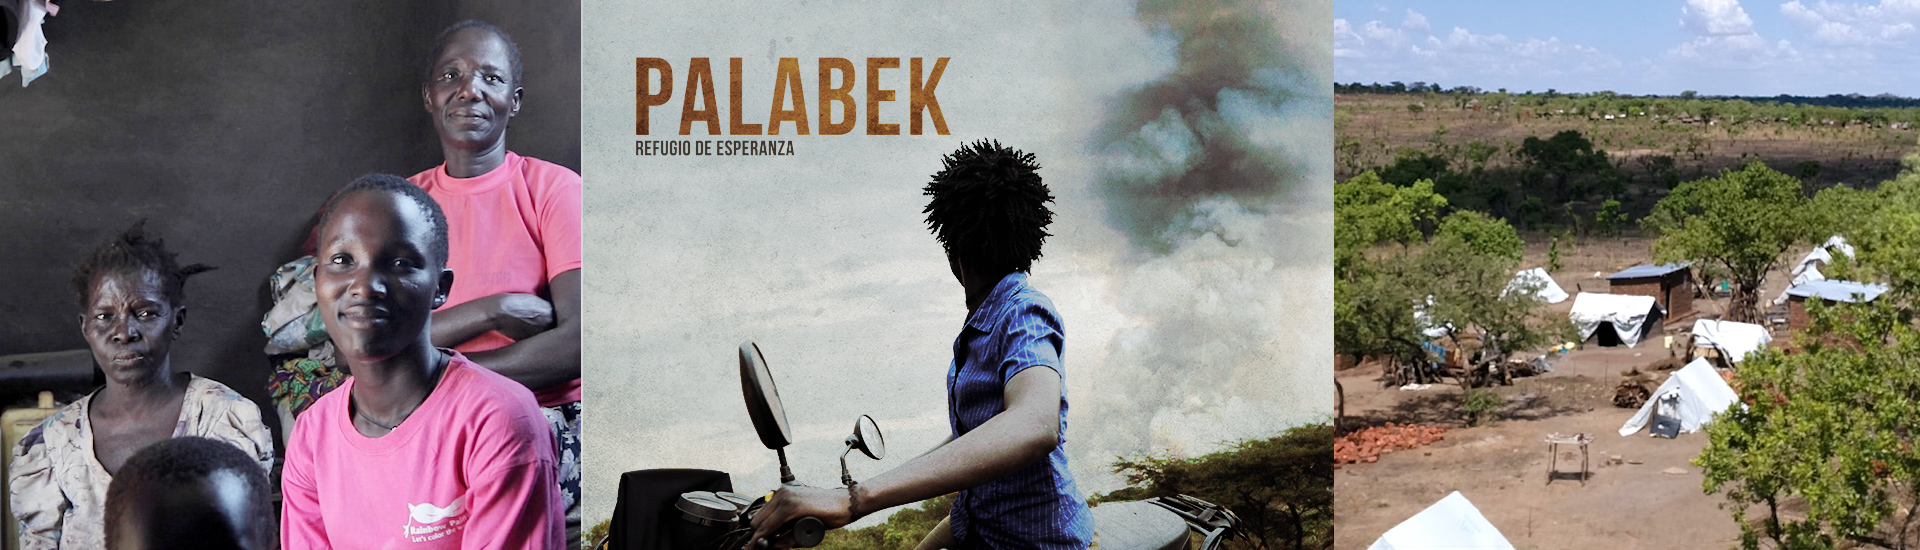 Palabek. Refugio de esperanza documental